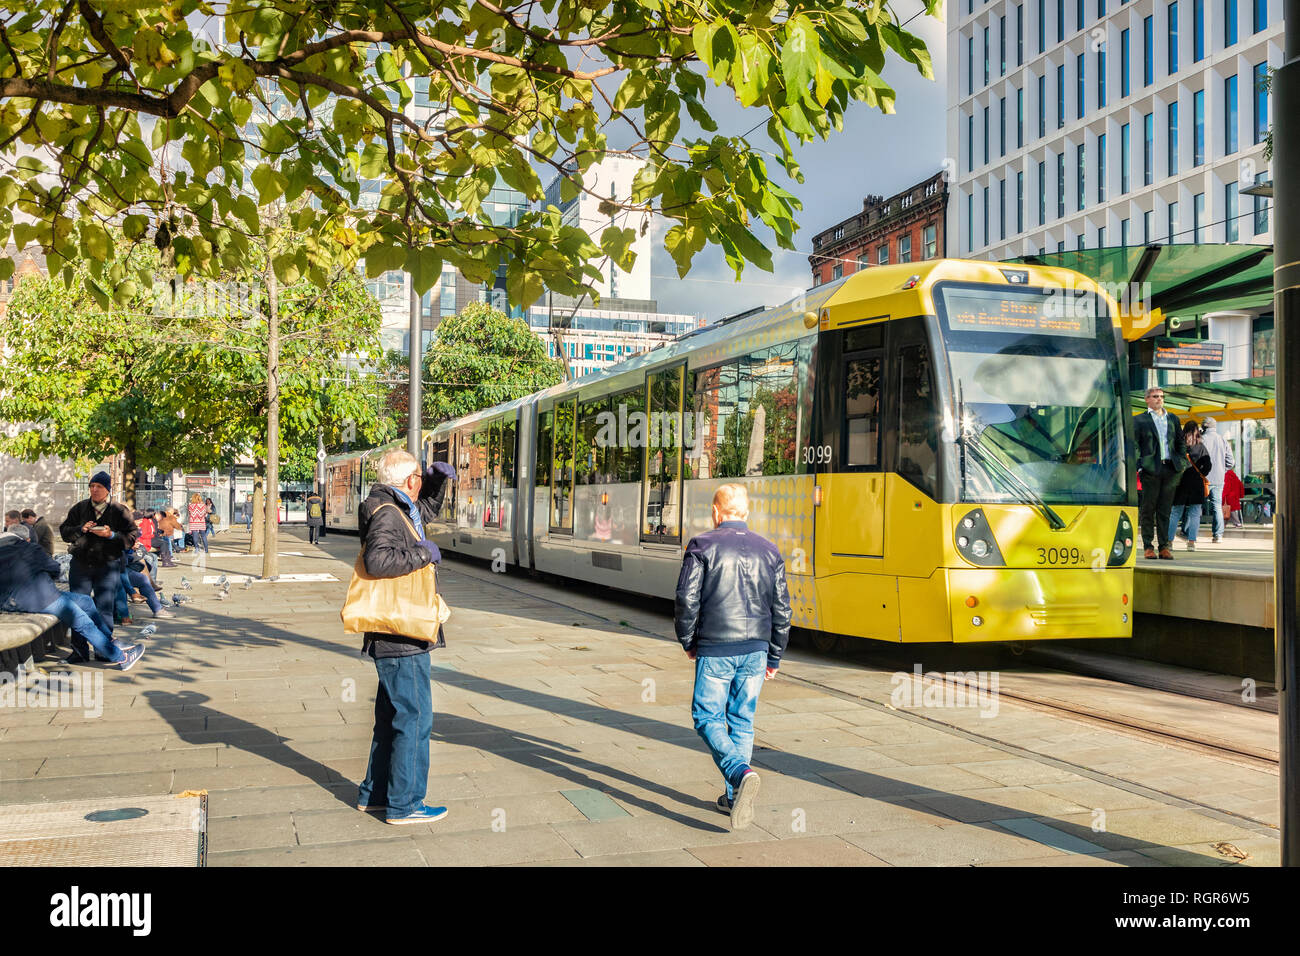 2 November 2018: Manchester, UK - Metrolink tram in St Peter's Square in the autumn sunshine. Stock Photo